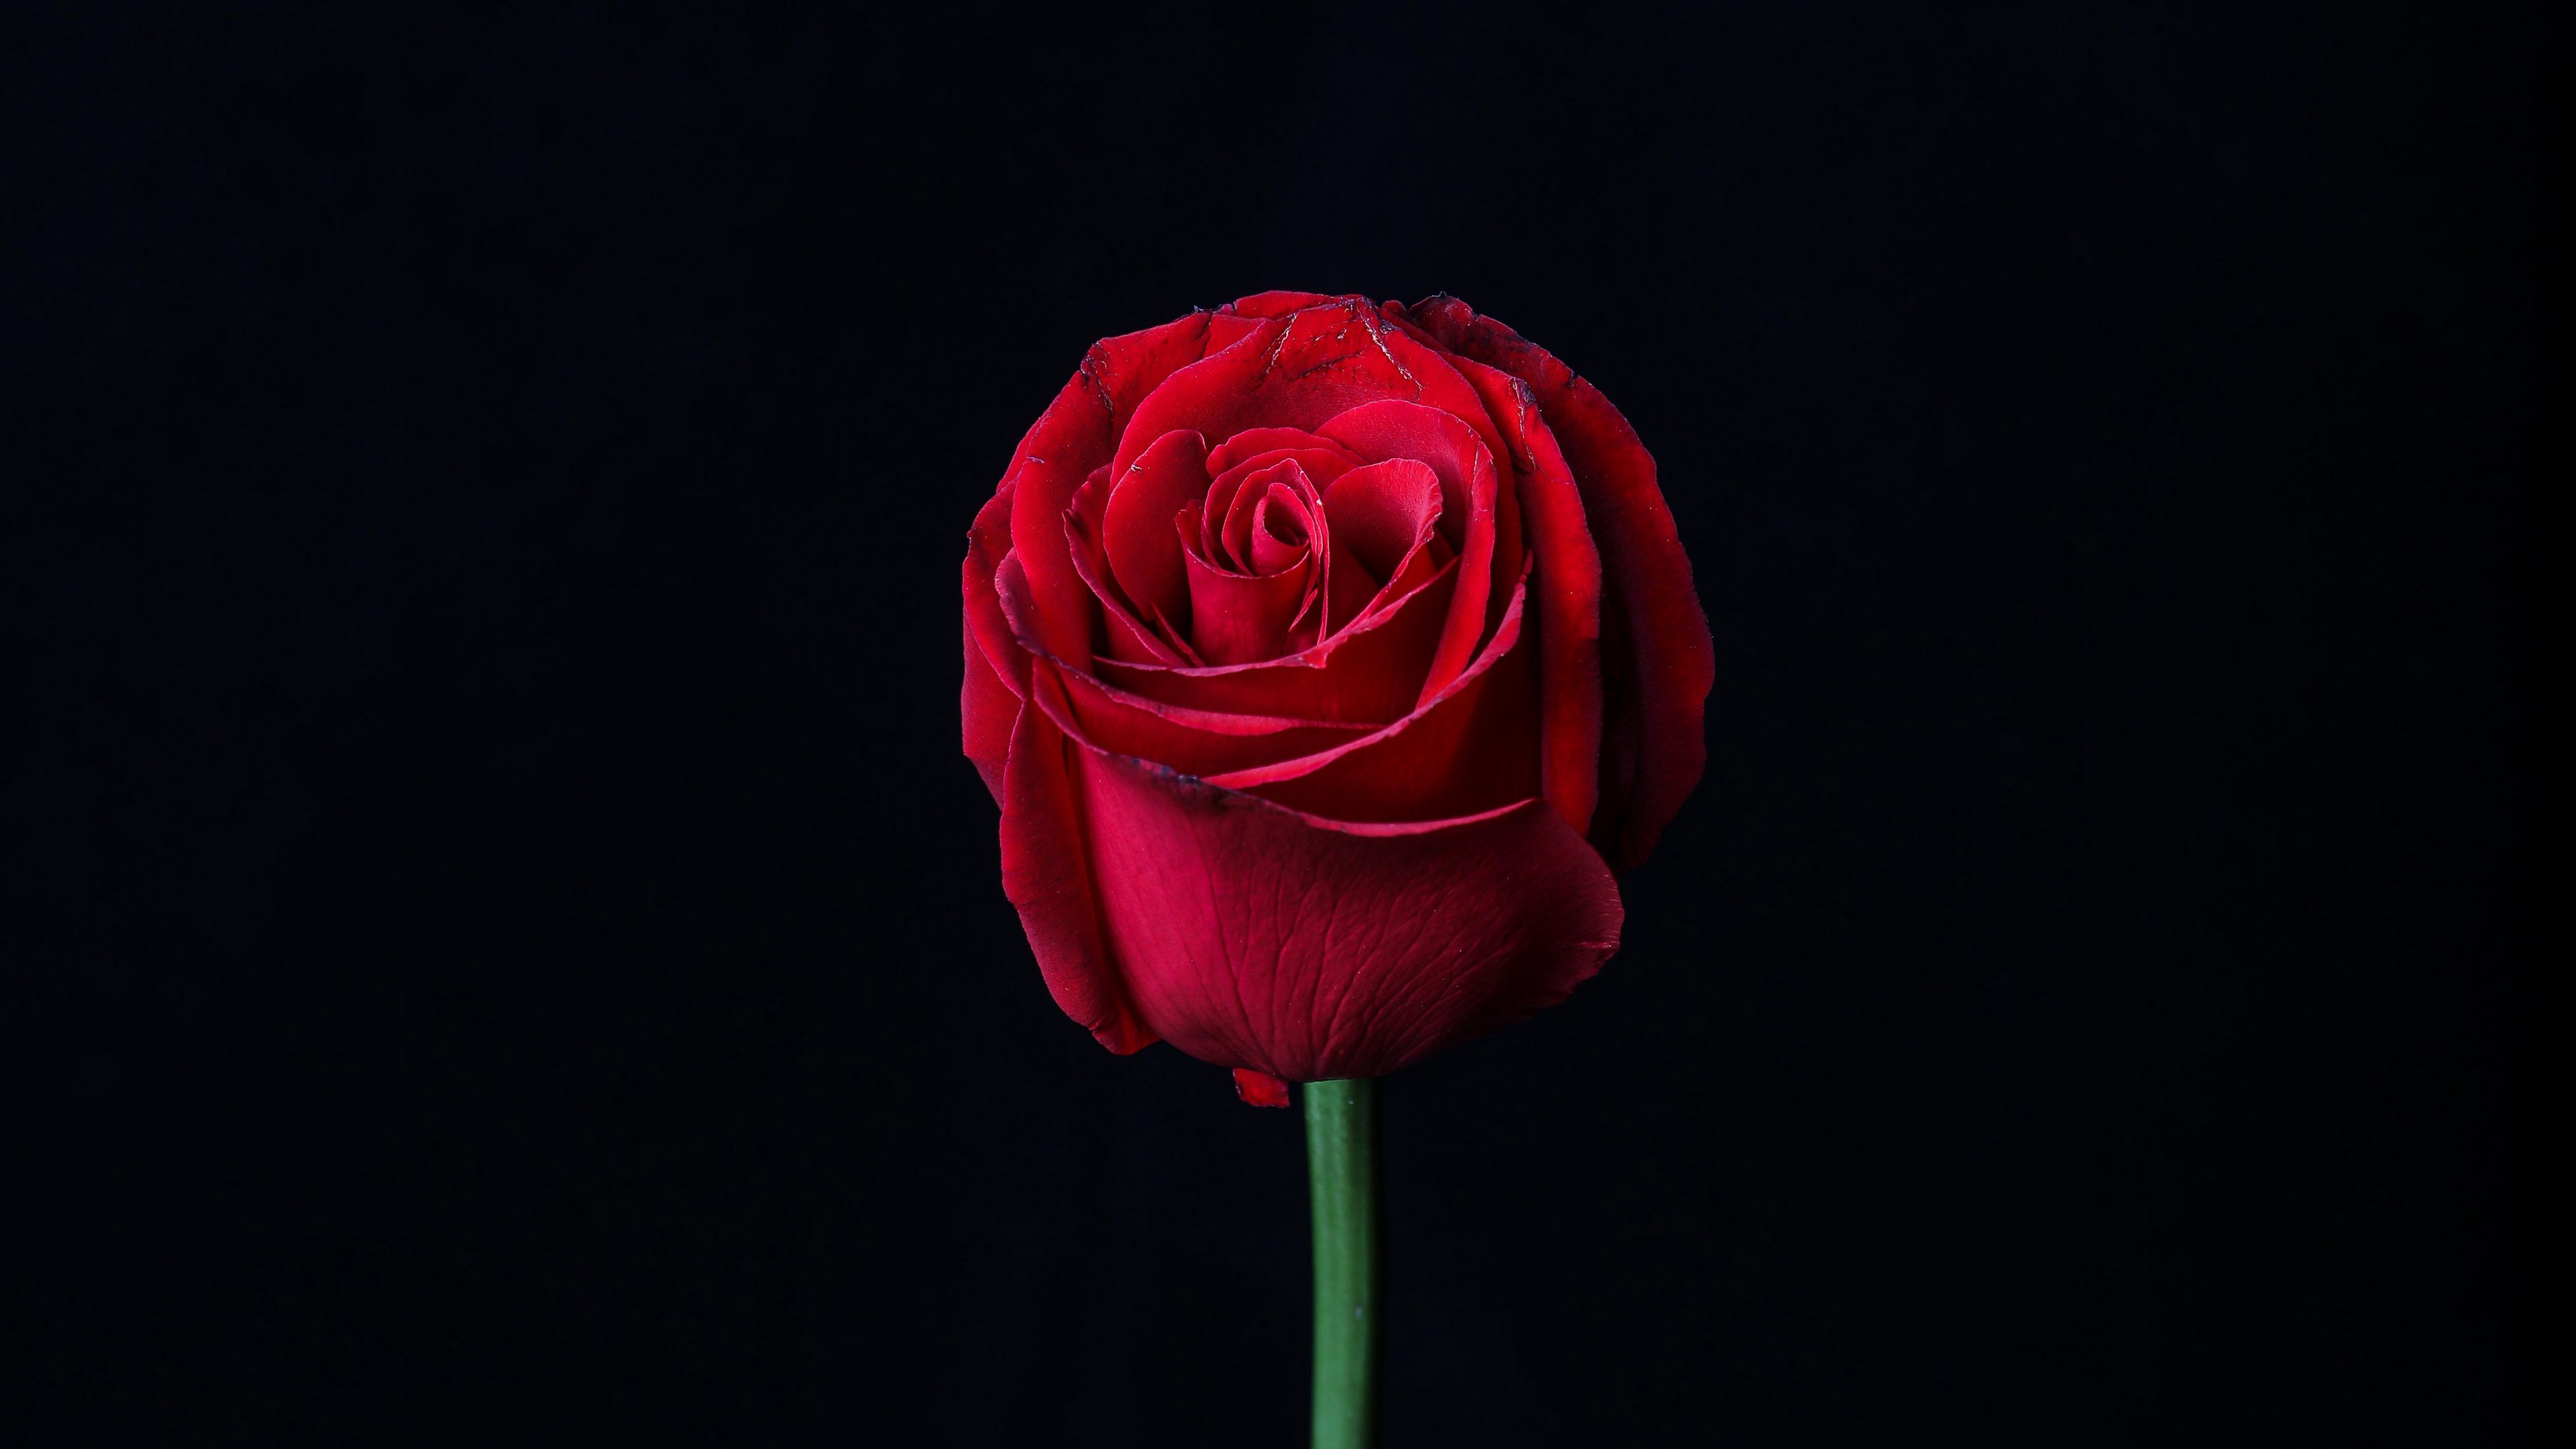 Download wallpaper 3840x2160 rose, red, bud, flower, dark 4k uhd 16:9 ...